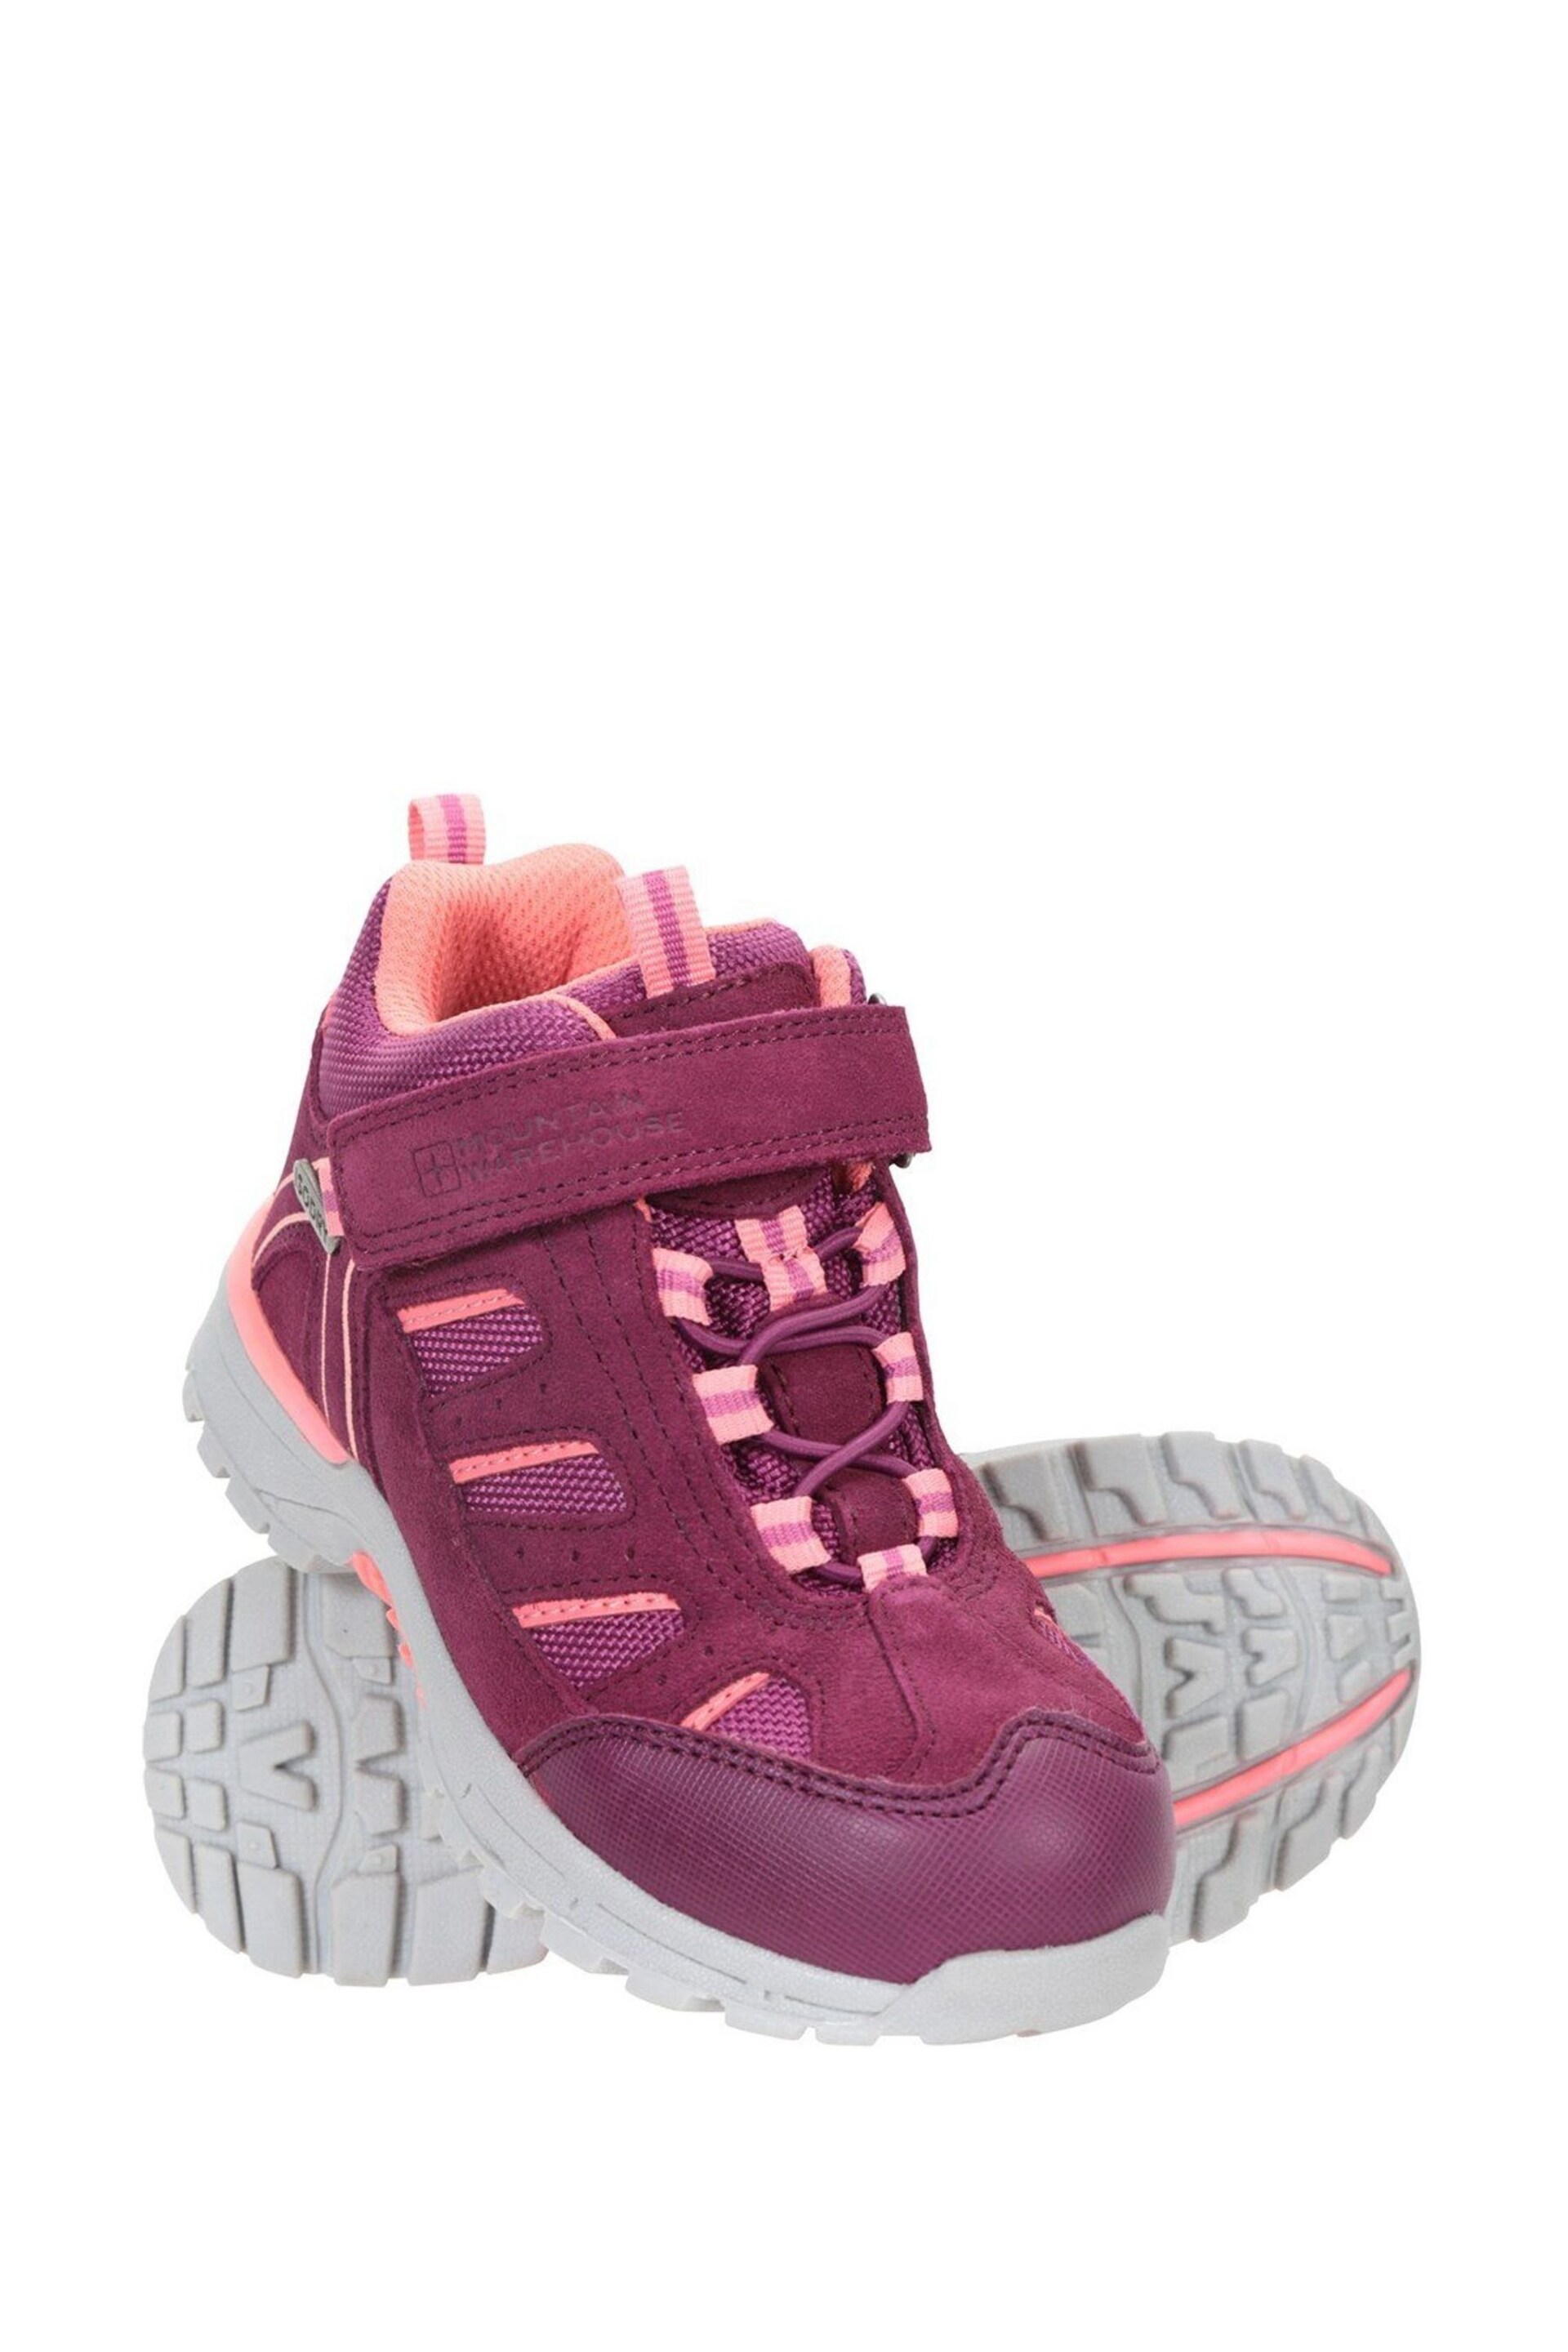 Mountain Warehouse Berry Drift Junior Waterproof Walking Boots - Image 1 of 4